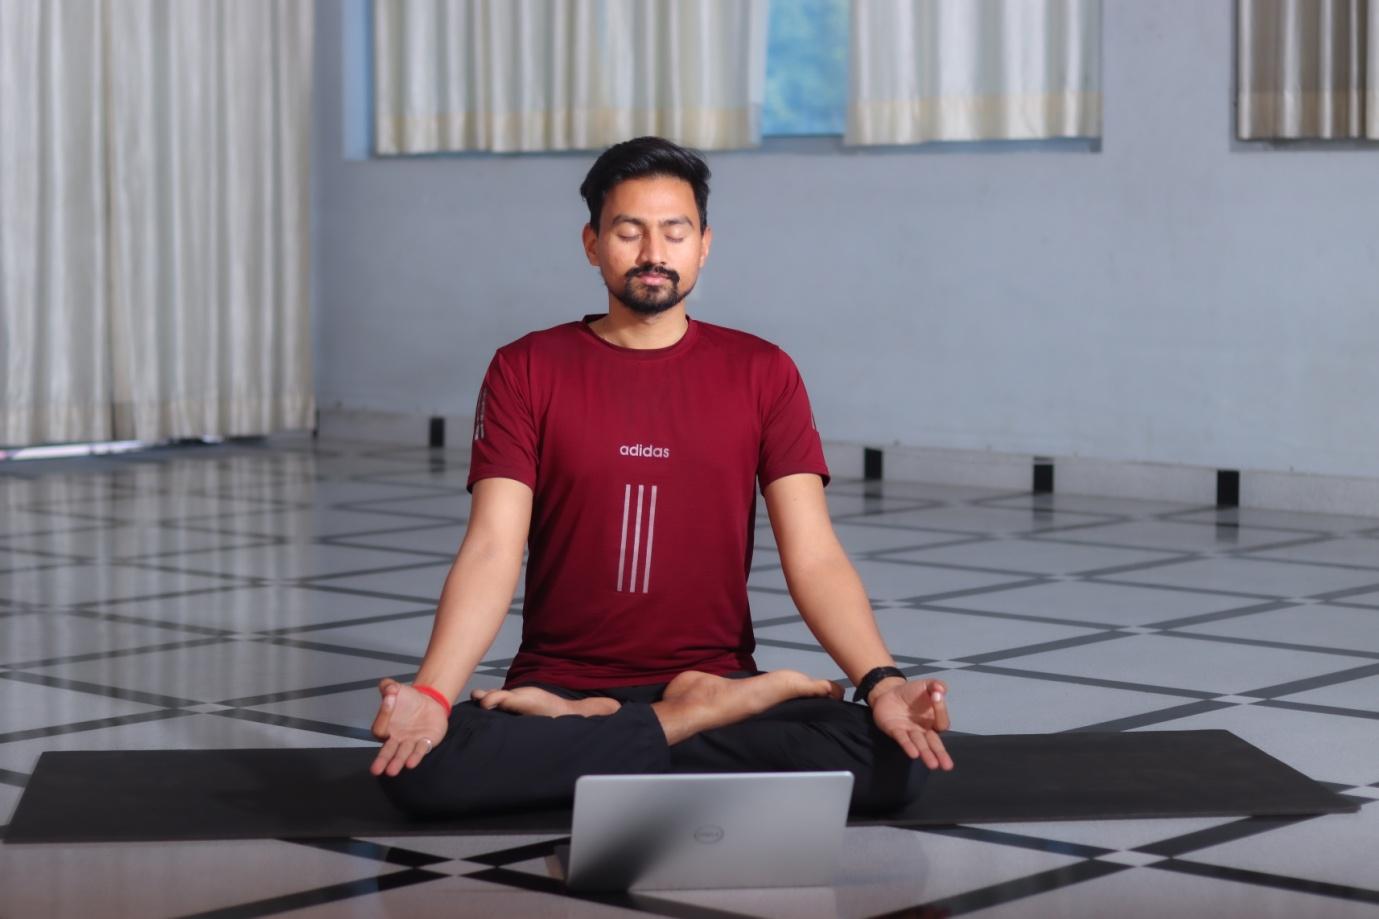 200 Hour Online Yoga Teacher Training Course